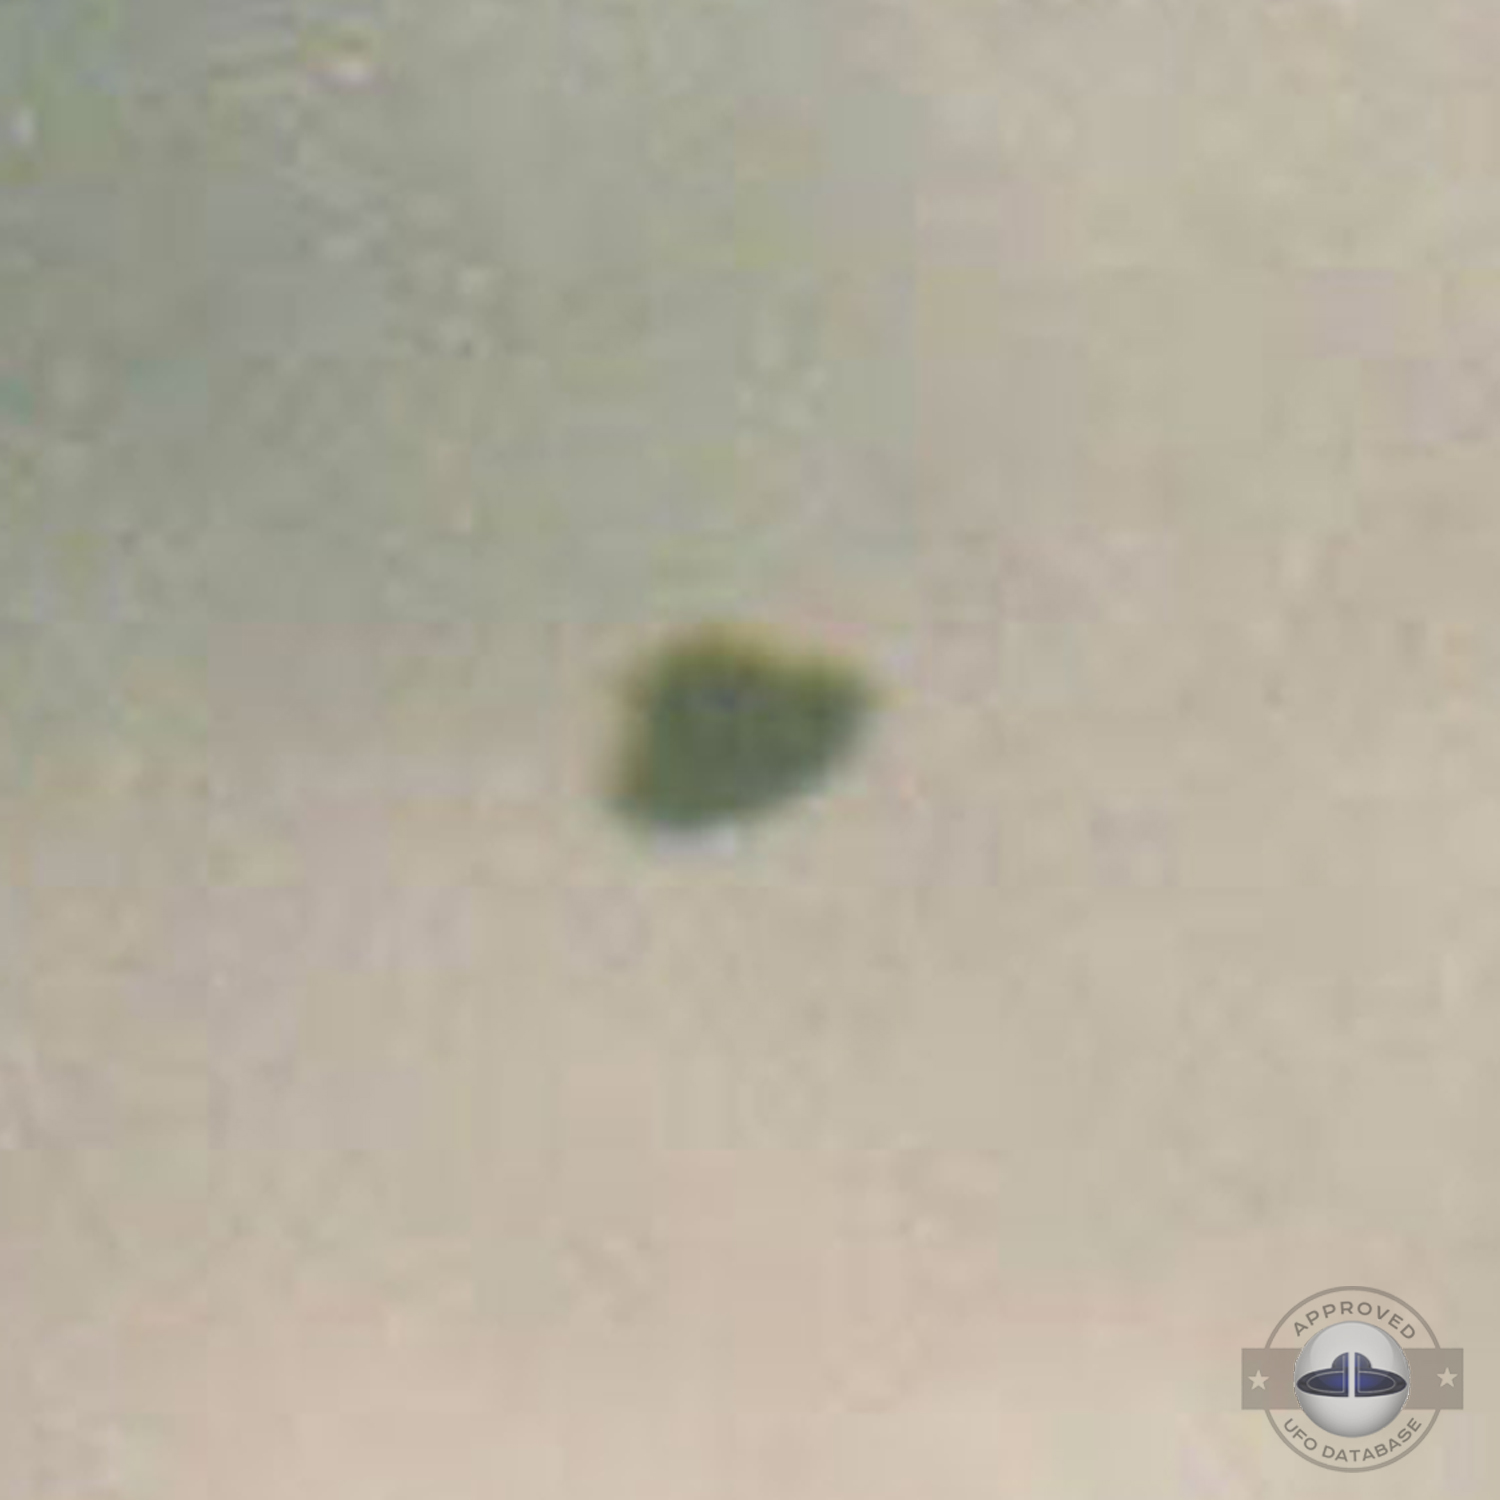 Grey UFO picture taken in a cloudy sky in San Carlos de Bariloche UFO Picture #22-3